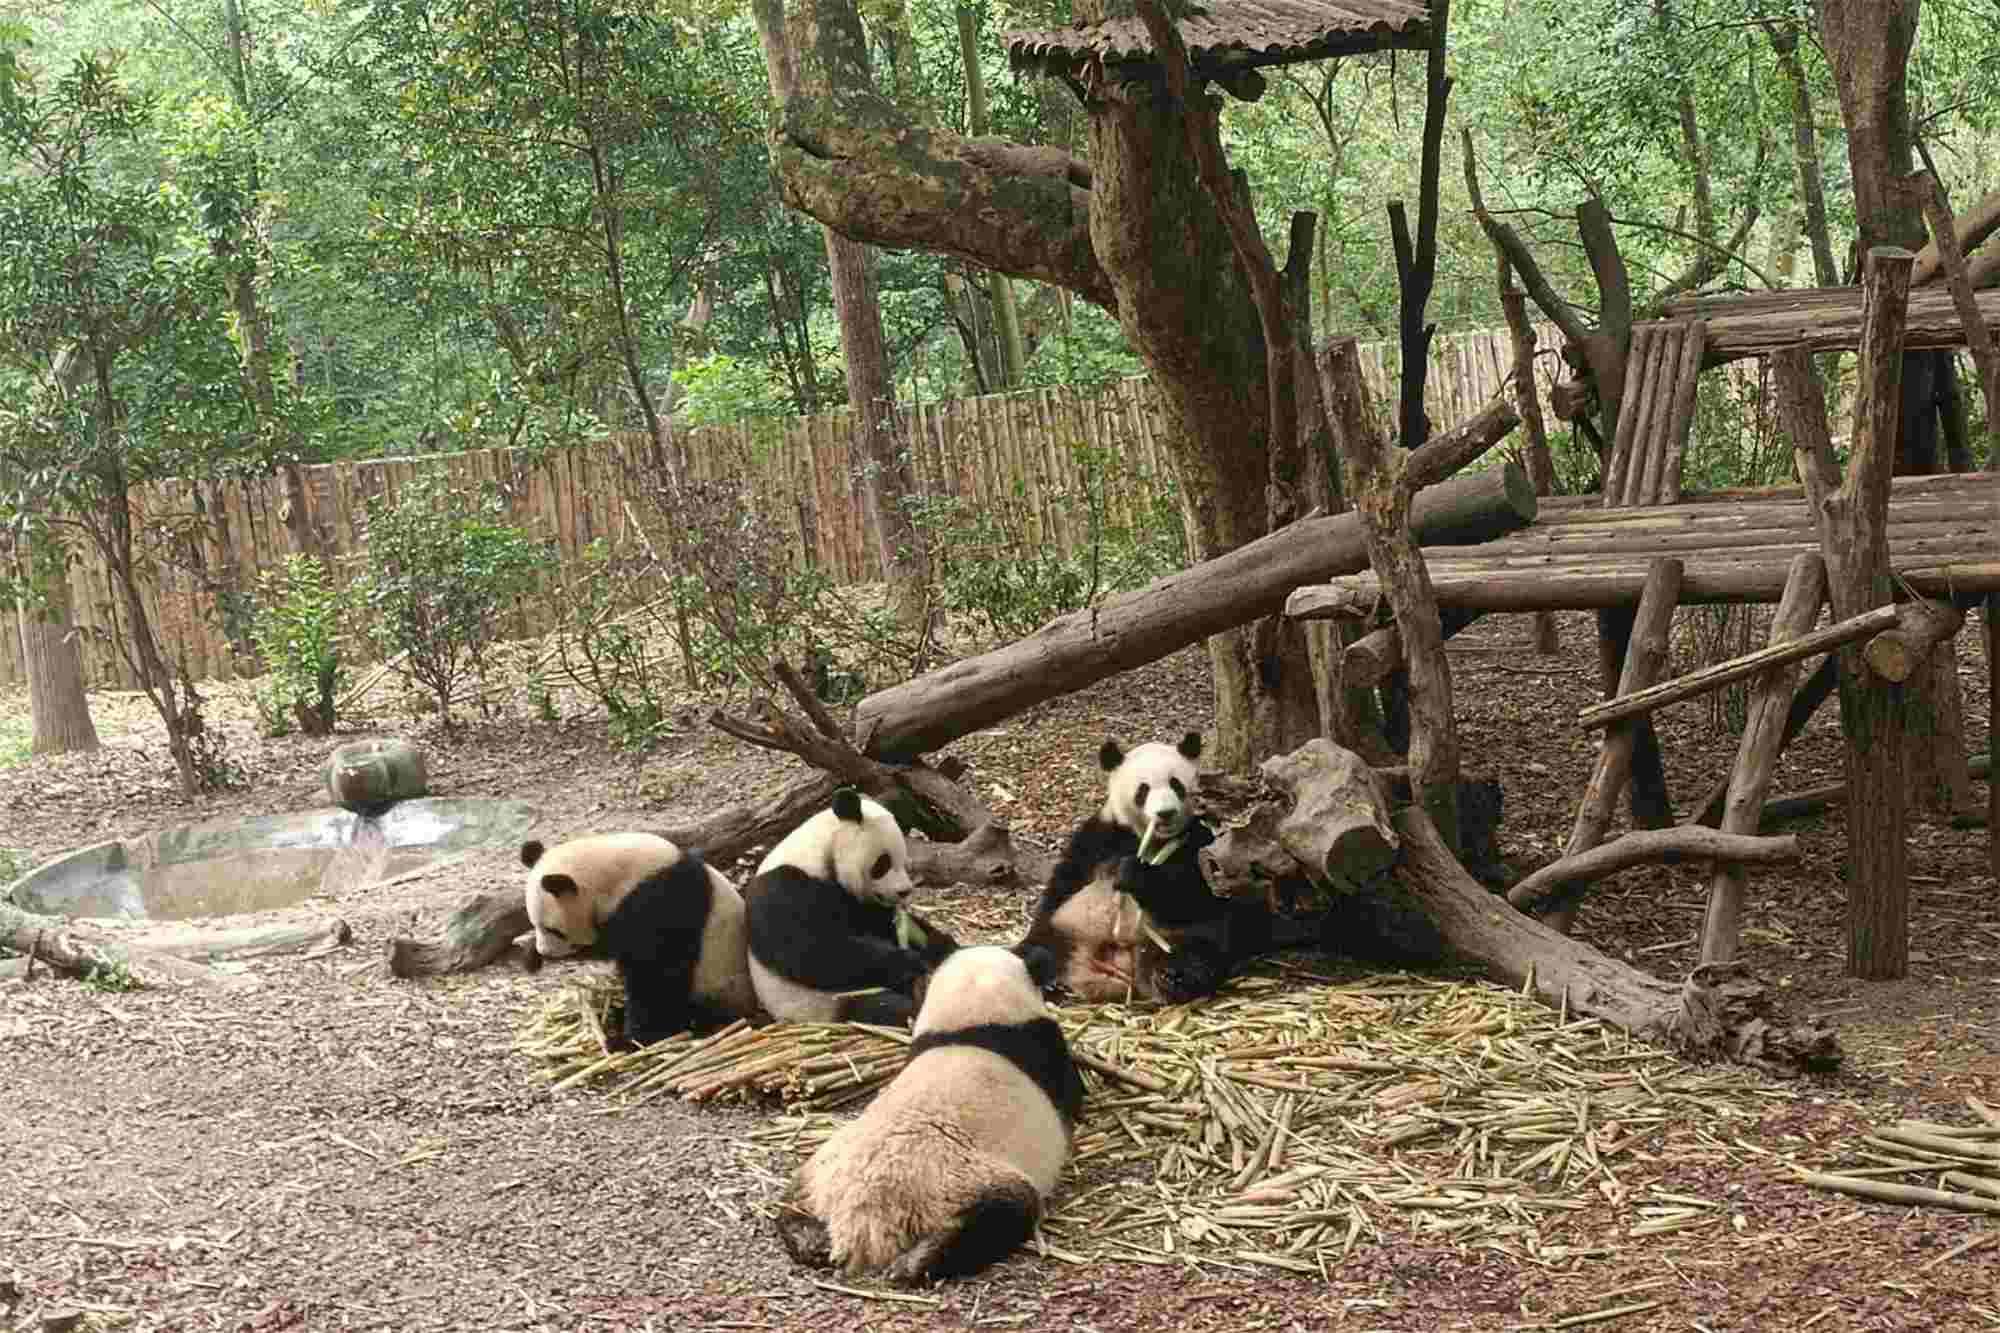 Chengdu Research Base of Giant Panda Breeding Tour